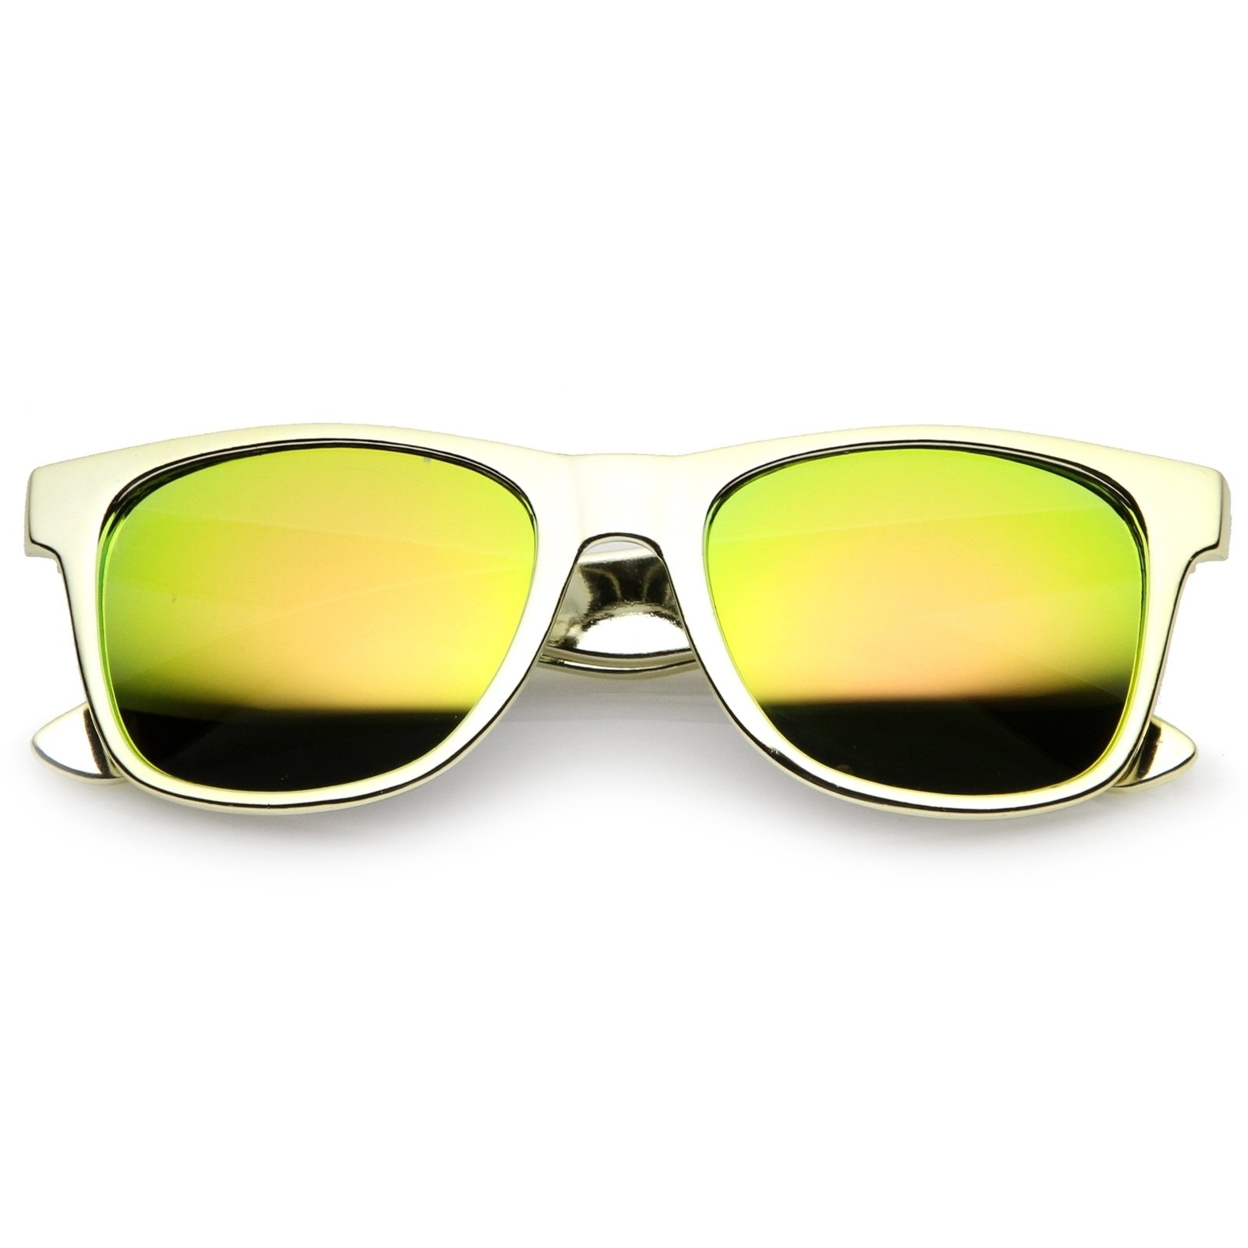 Retro Metallic Square Colored Mirror Lens Horn Rimmed Sunglasses 55mm - Gold / Yellow Mirror